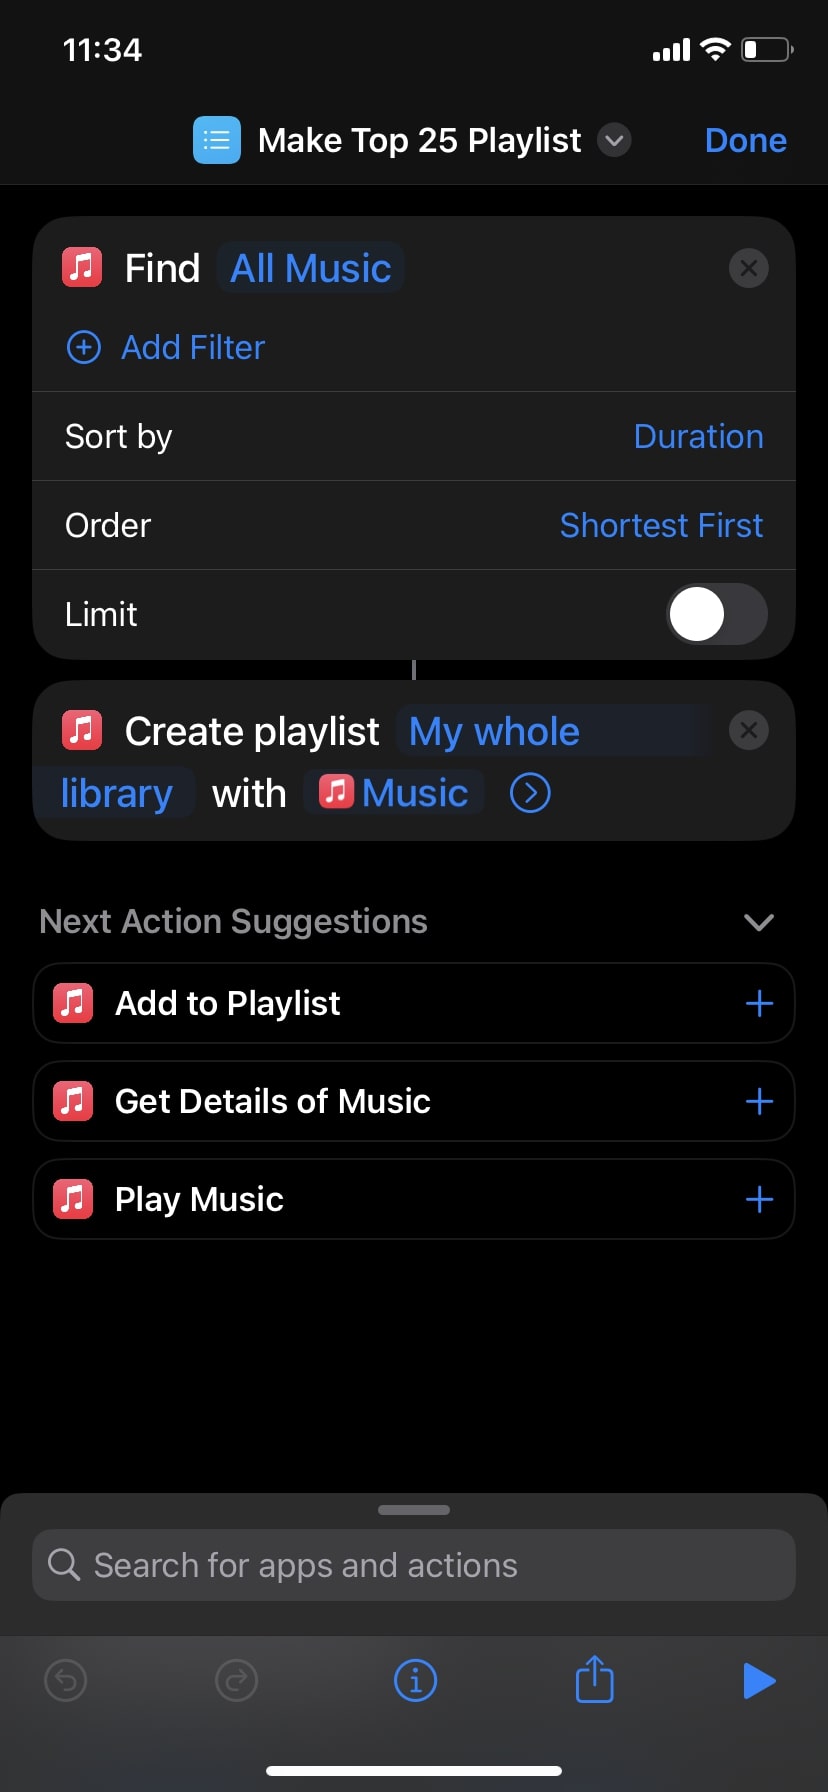 Make Top 25 Playlist shortcut settings on iPhone